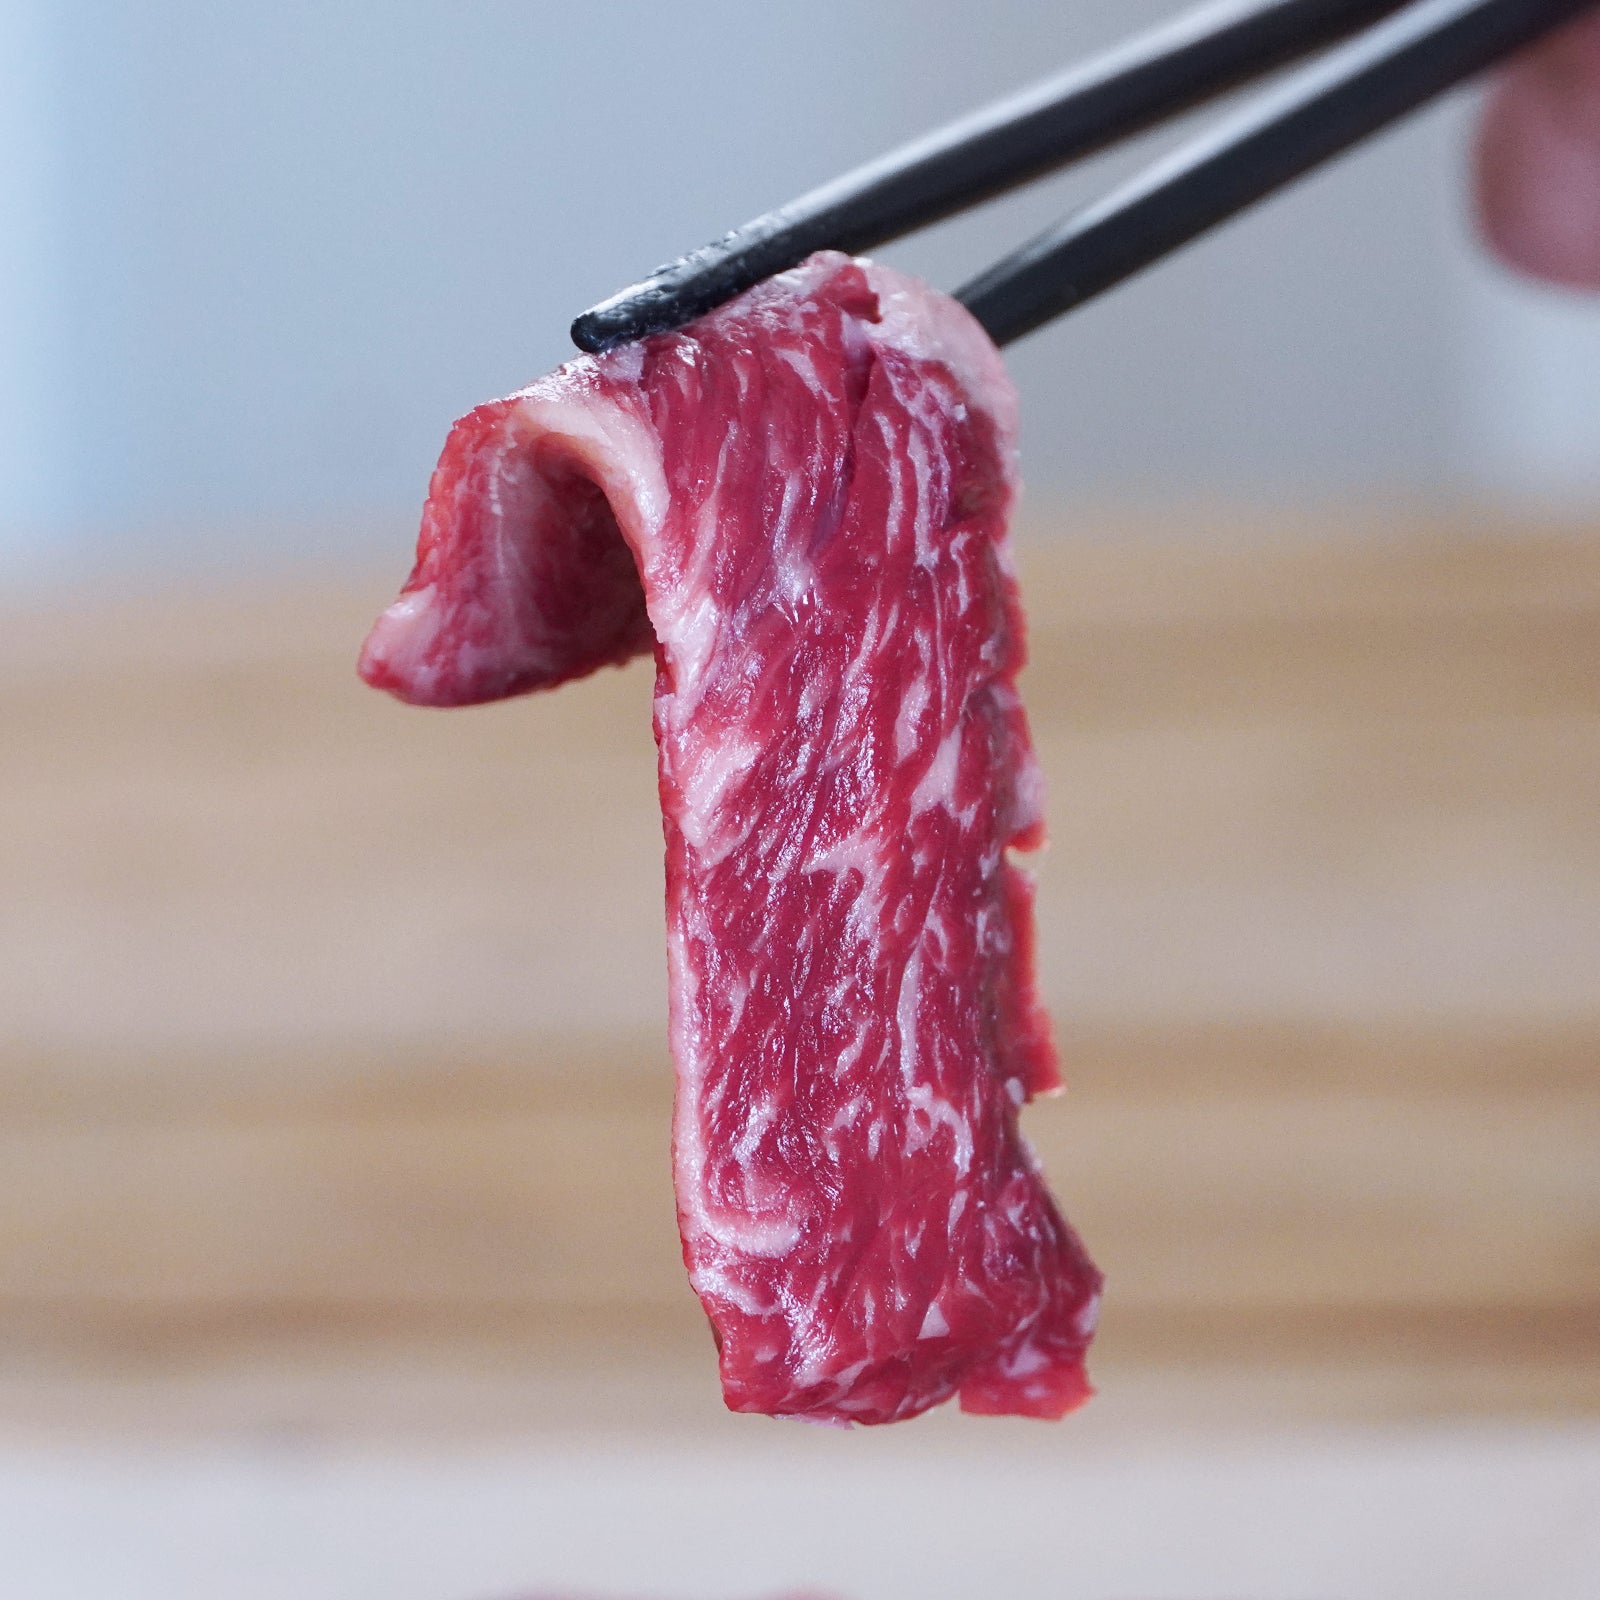 Japanese Range-Free Wagyu Beef BBQ Slices from Iwate (Jou Rousu) (300g) - Horizon Farms